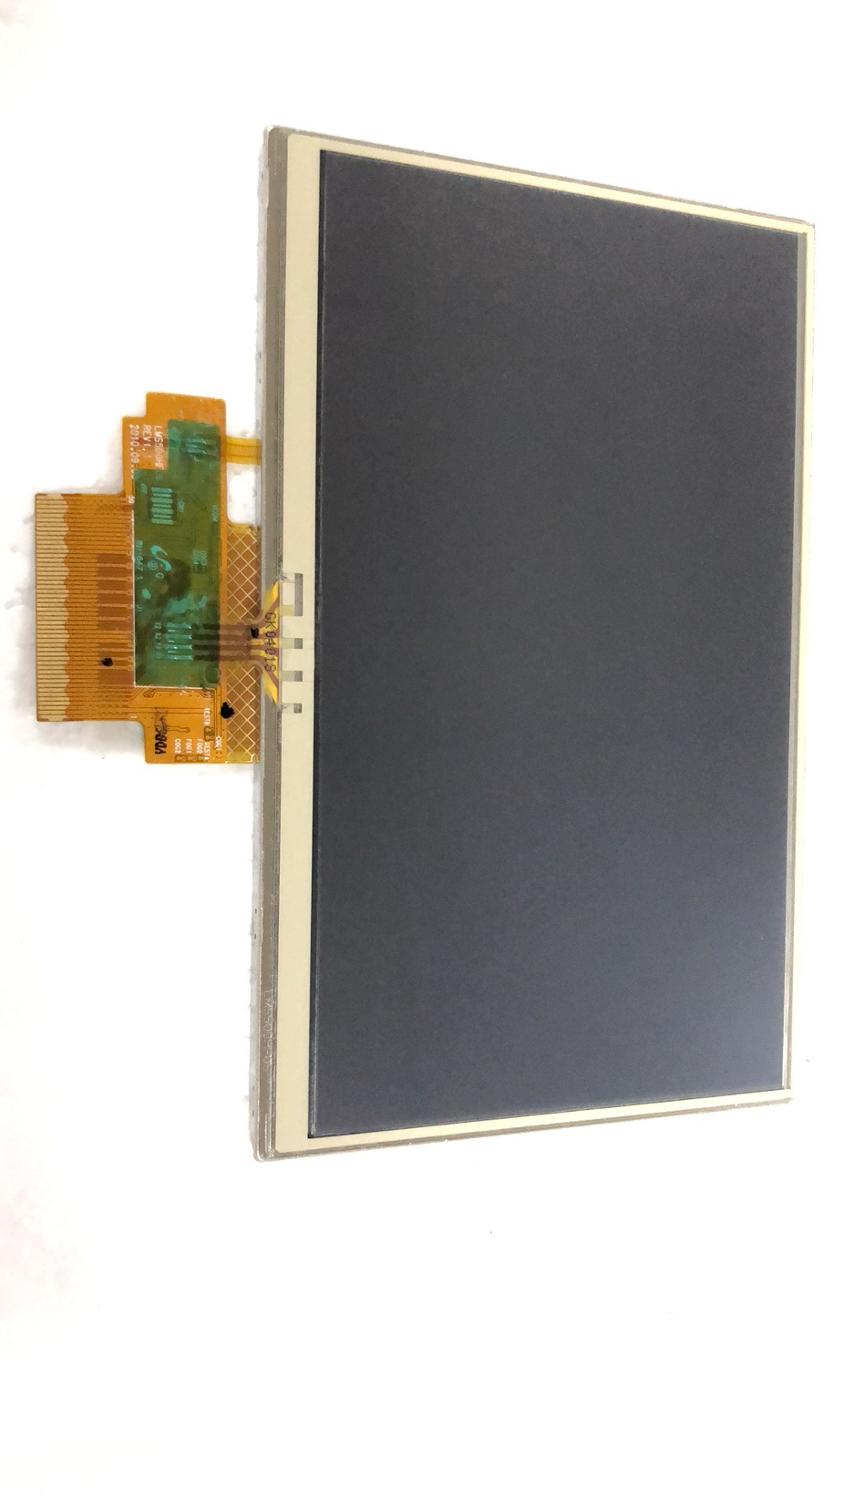 NEUE LCD Display 5 "inch LCD Voor Tomtom Tomtom VIA 115 125 GPS lcd-scherm met touch screen digitizer panel